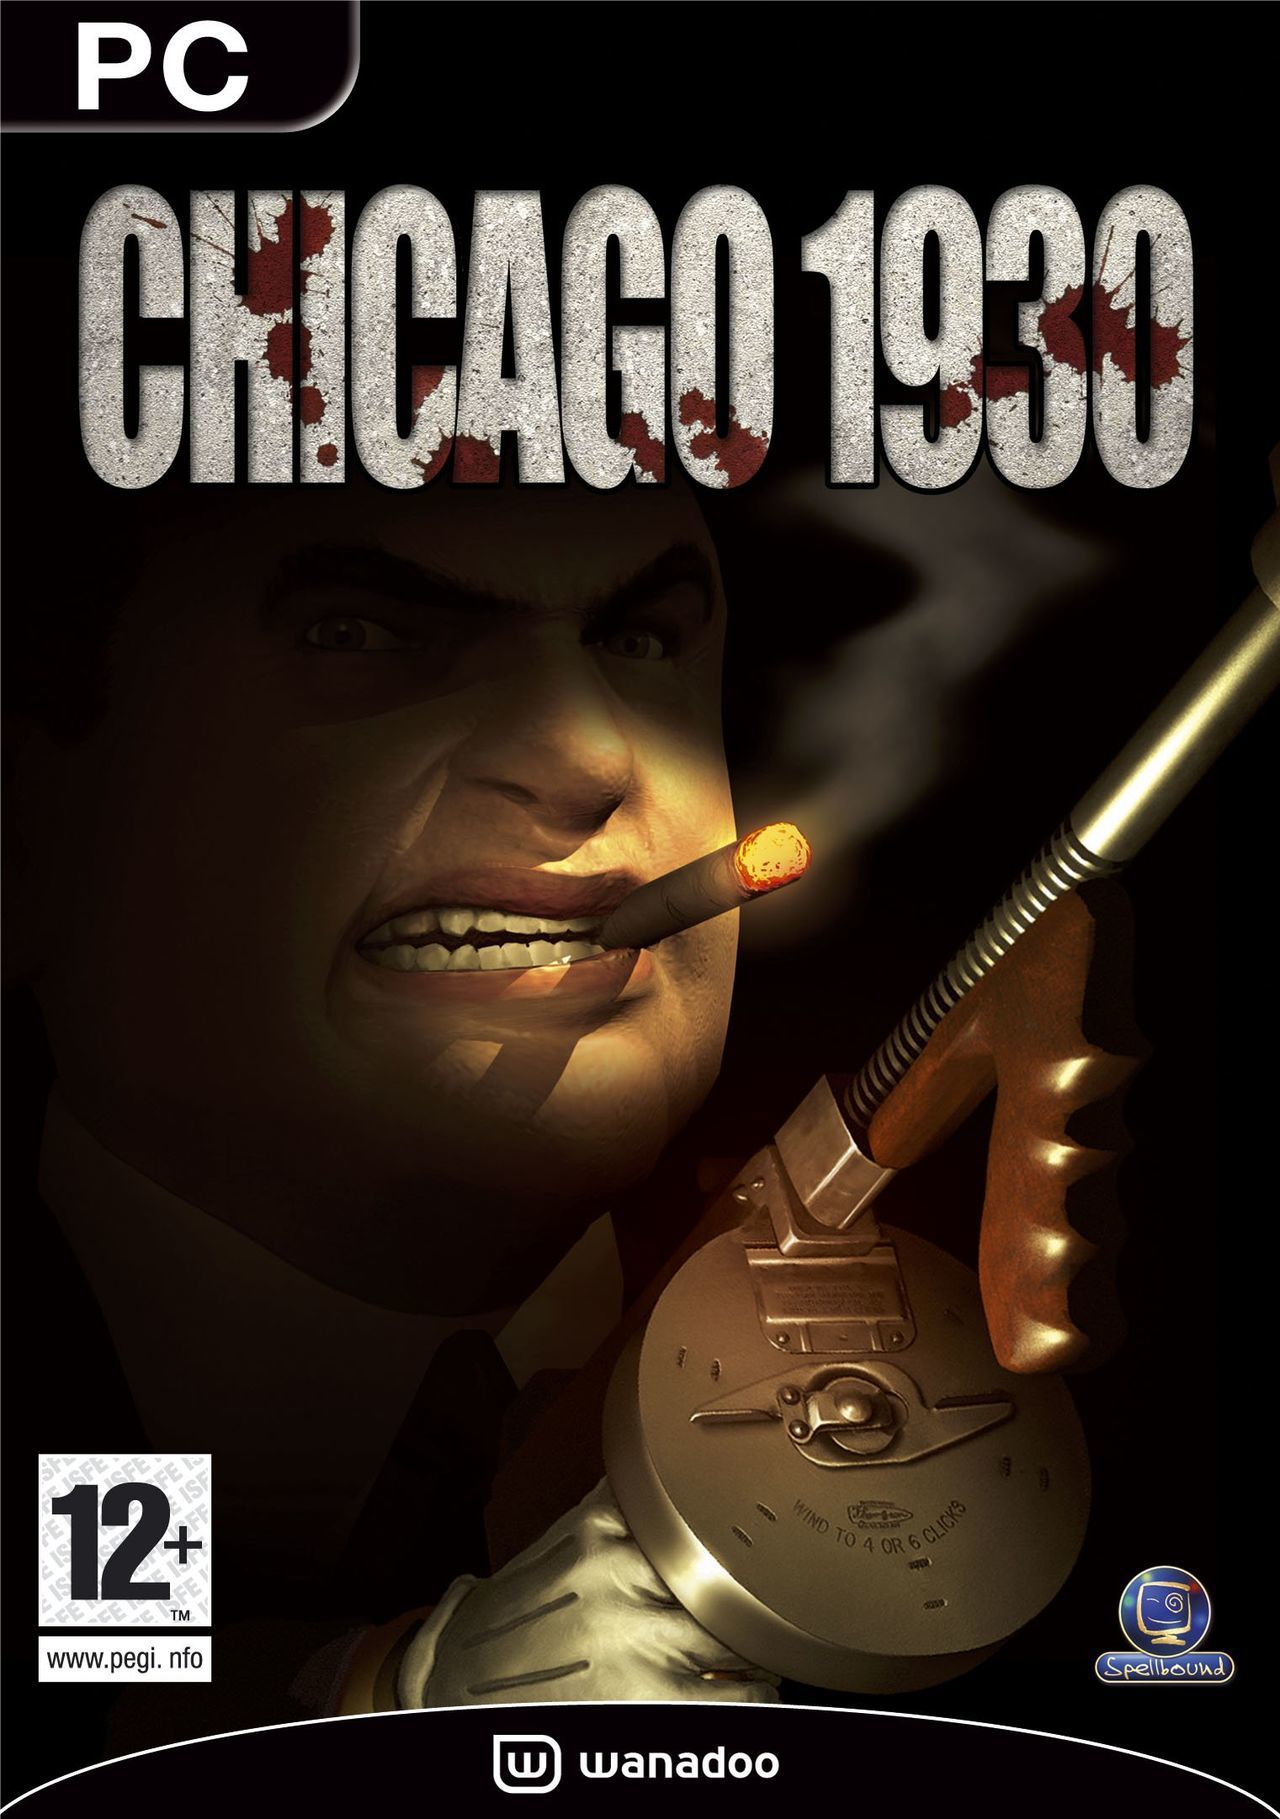 Chicago 1930 (2004)